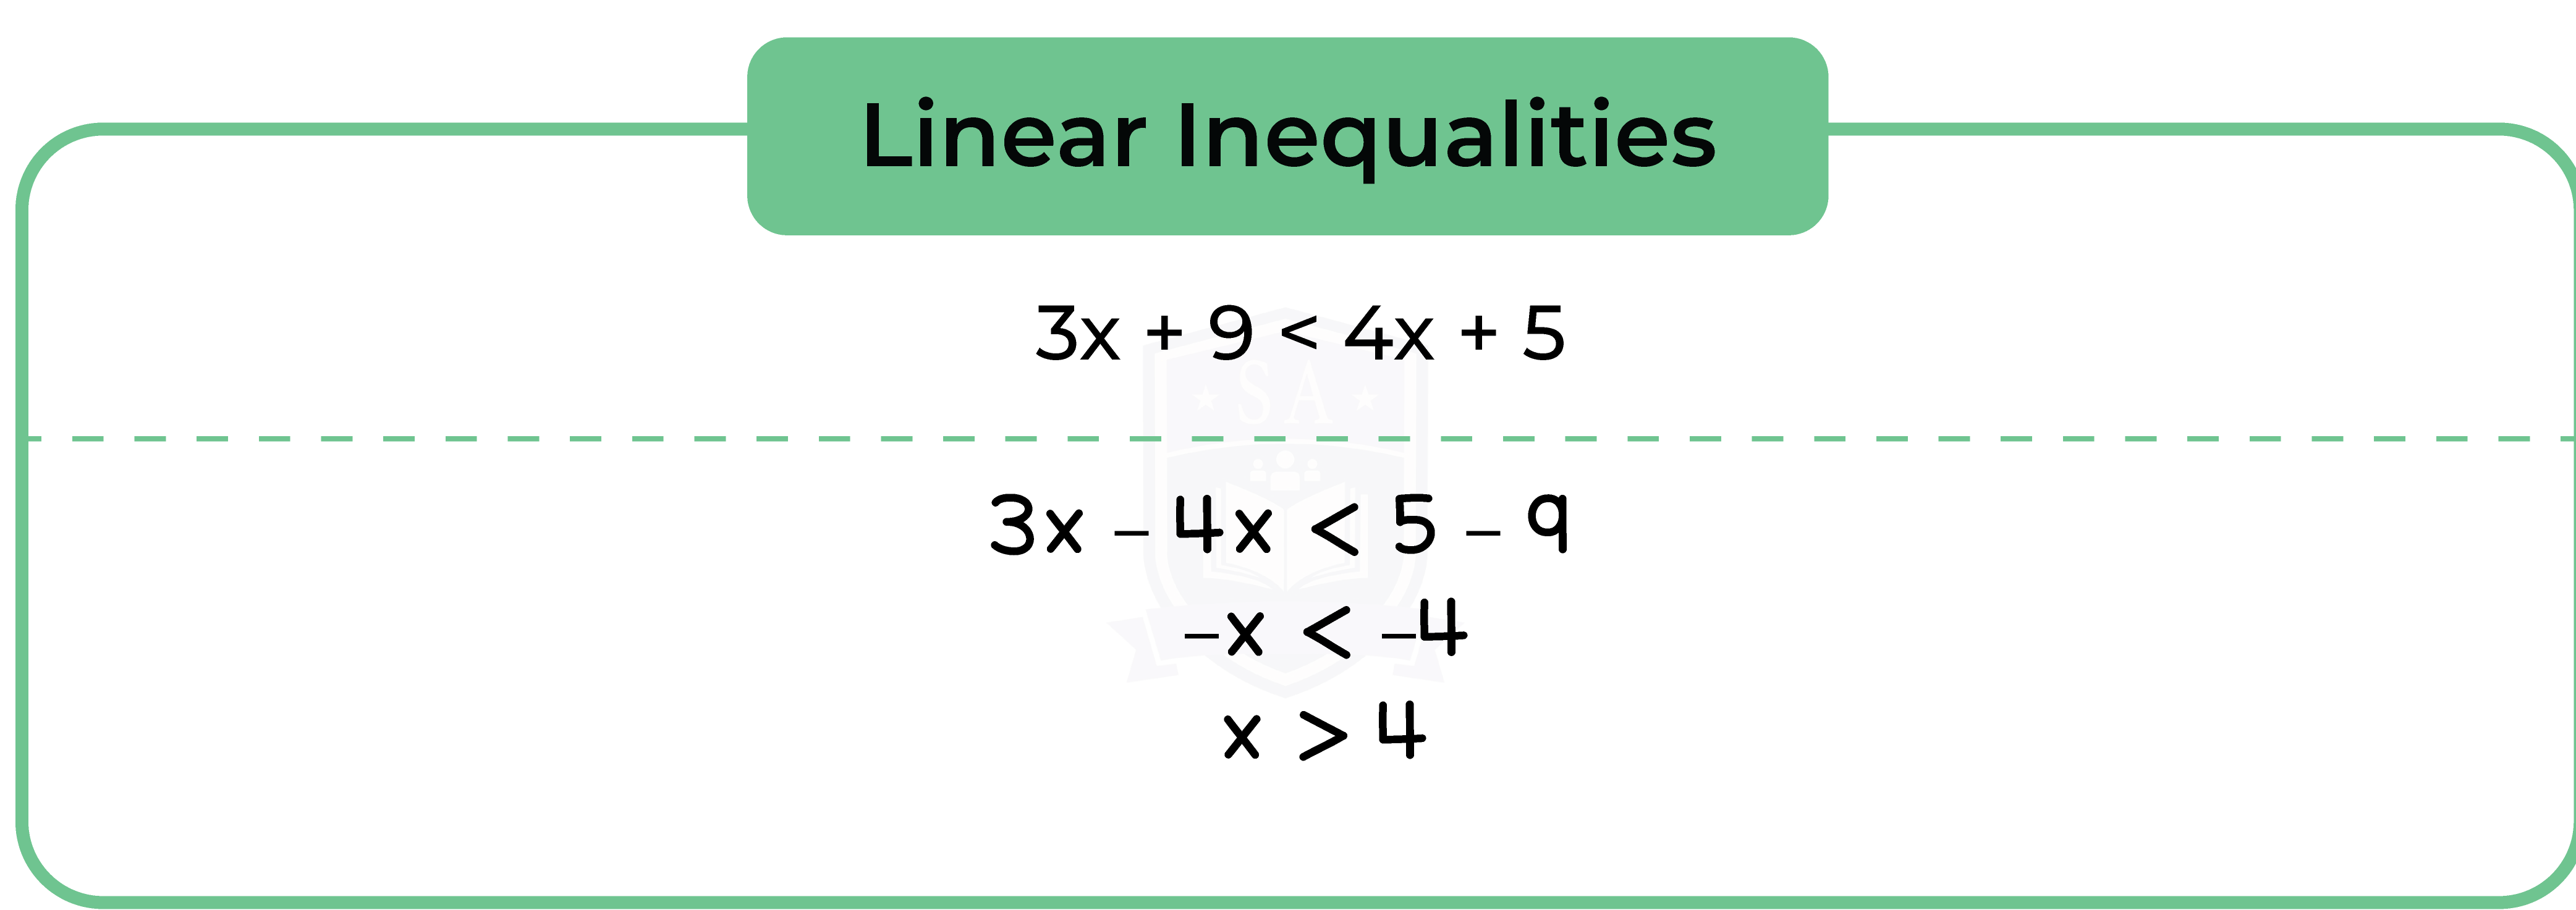 edexcel_igcse_mathematics a_topic 19_inequalities_004_Linear inequalities